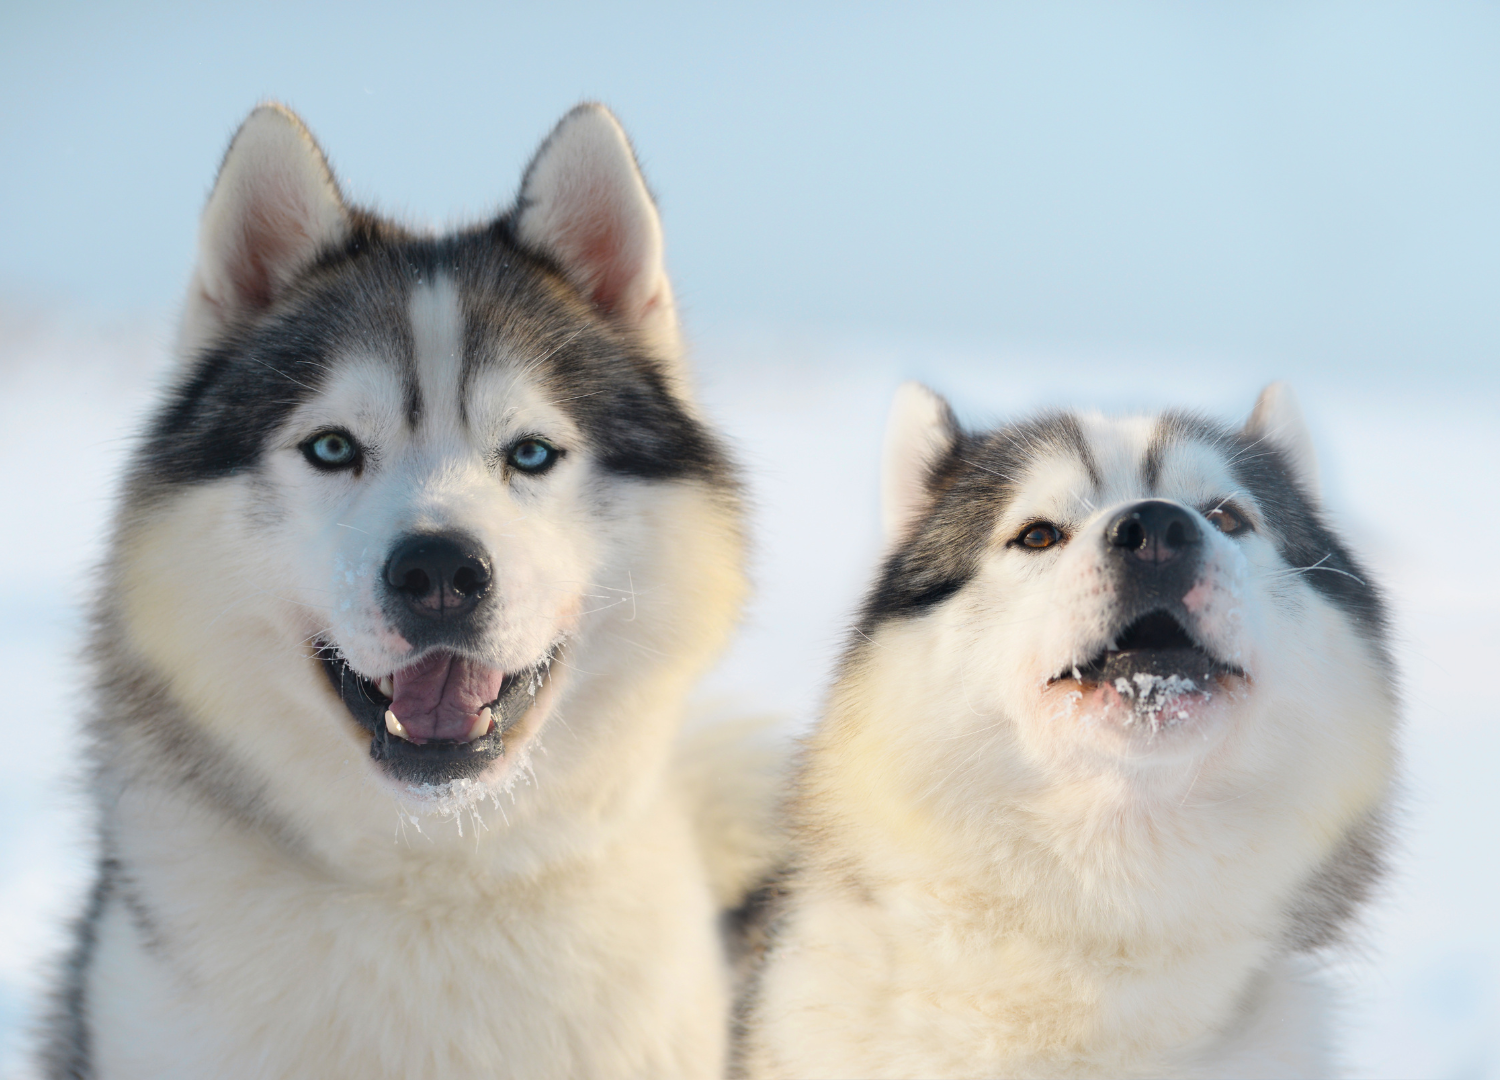  Dogs With Blue Eyes: Siberian Husky